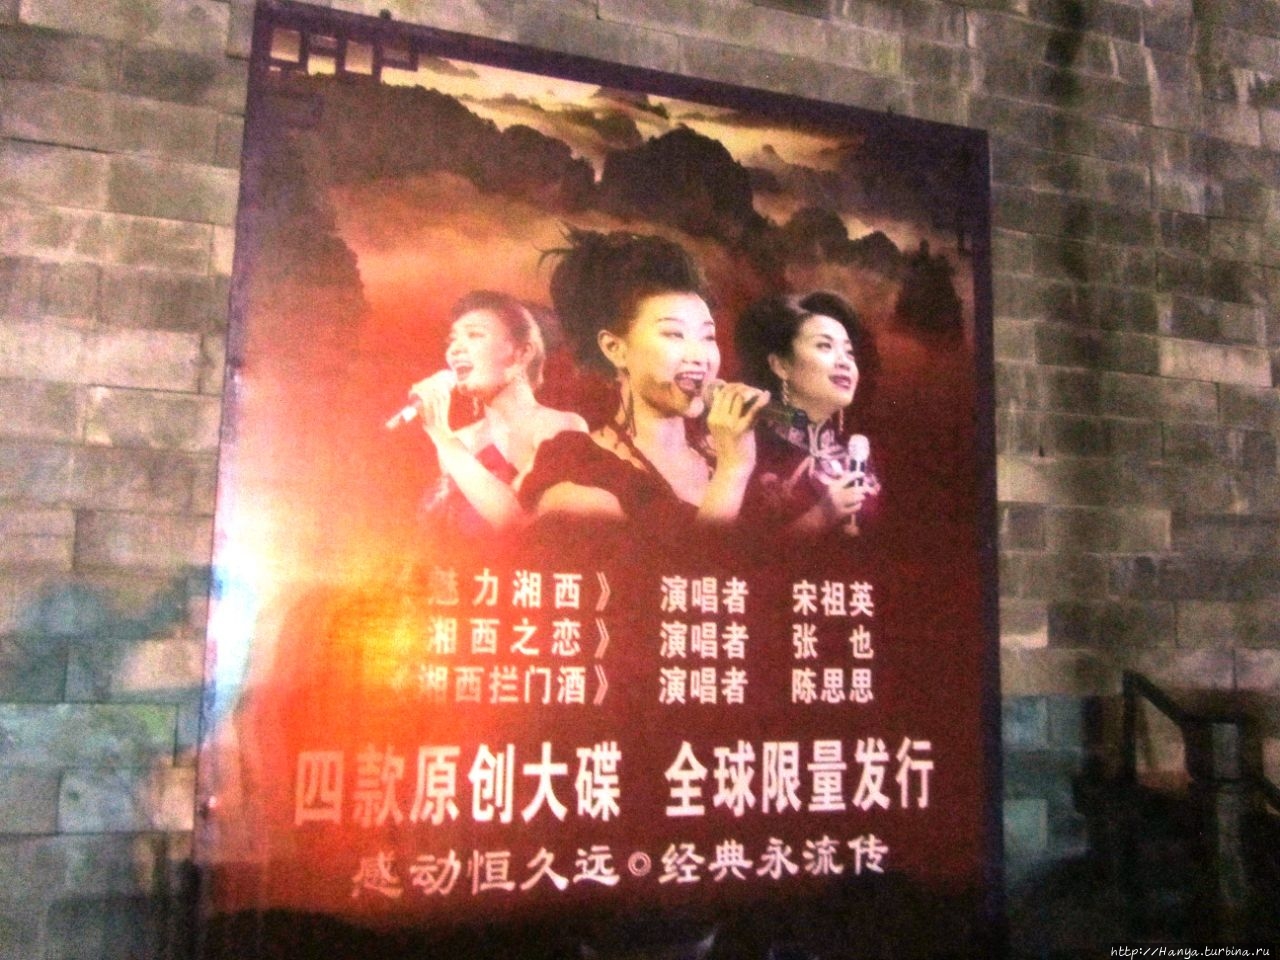 Театр Charming Xiangxi Grand Чжанцзяцзе Национальный Лесной Парк (Парк Аватар), Китай